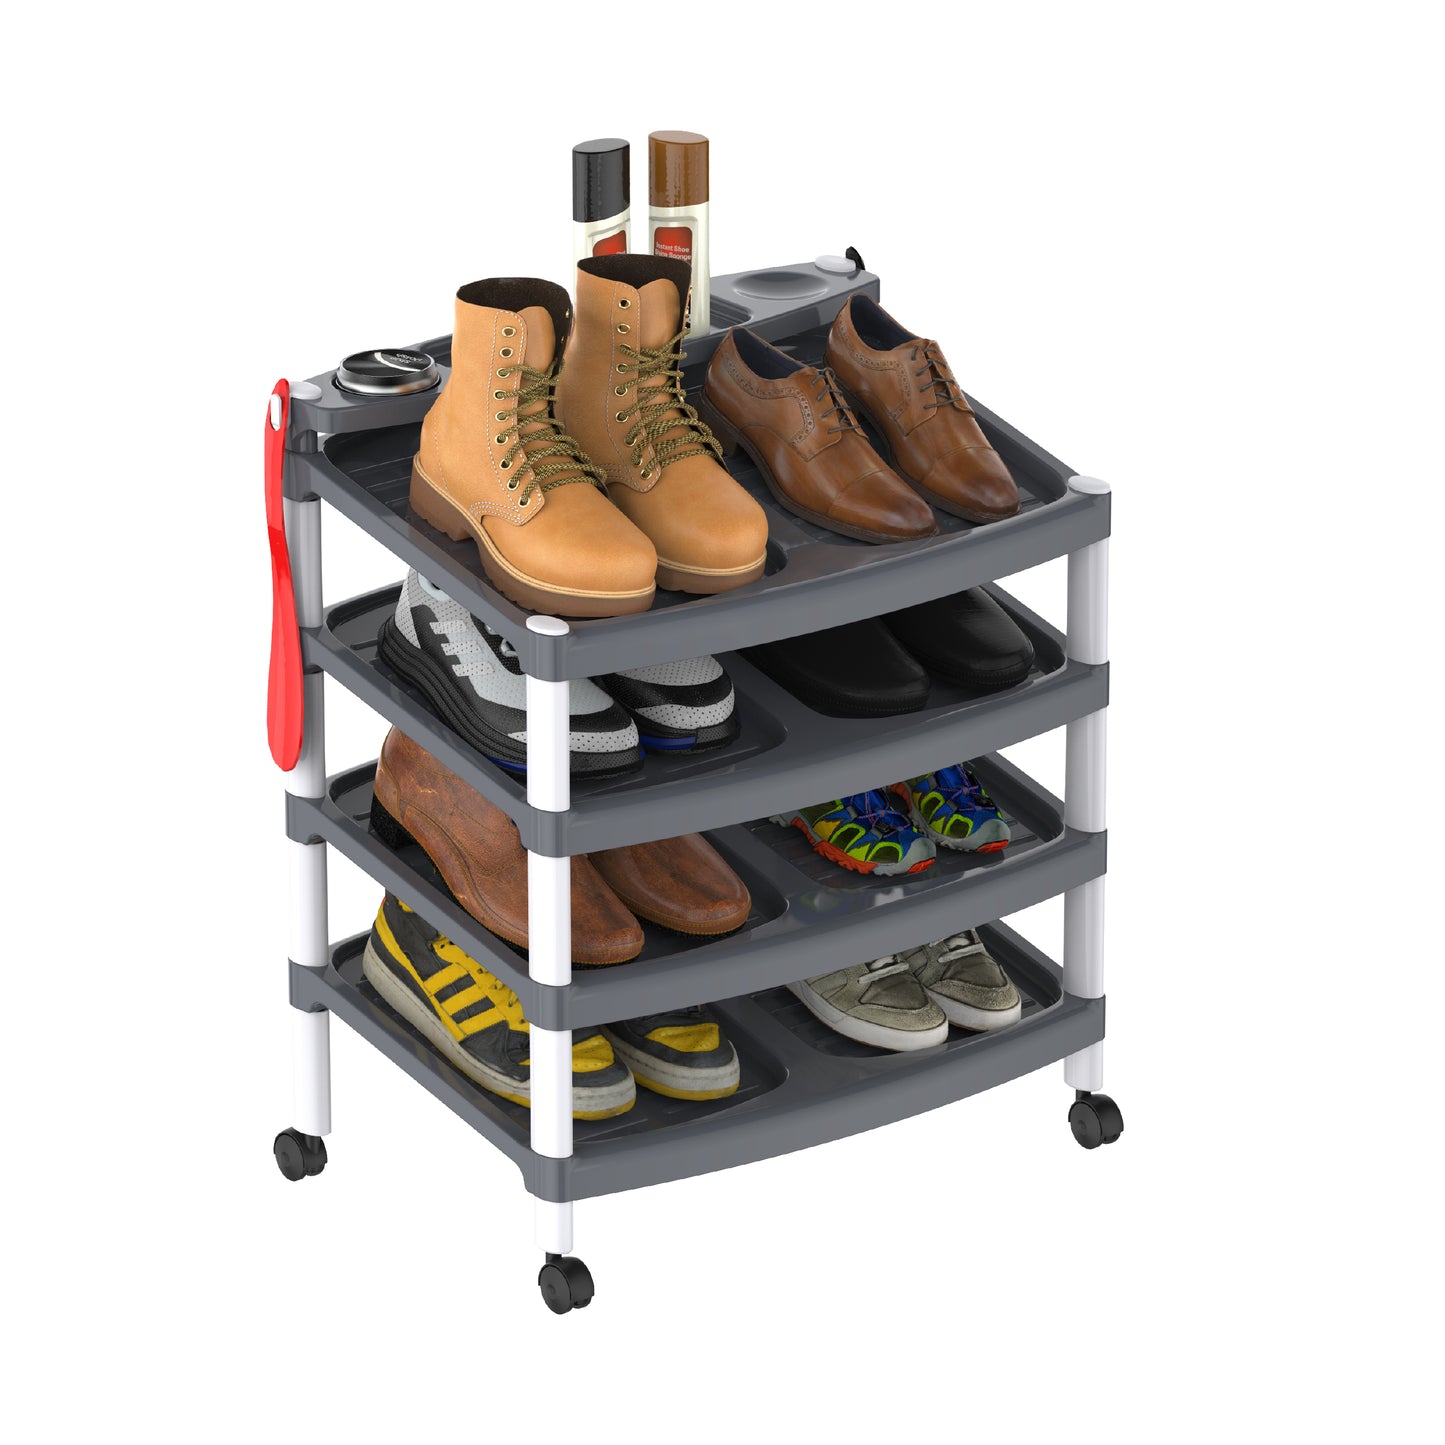 4 Tiers Shoe Storage Rack Organizer with Wheels